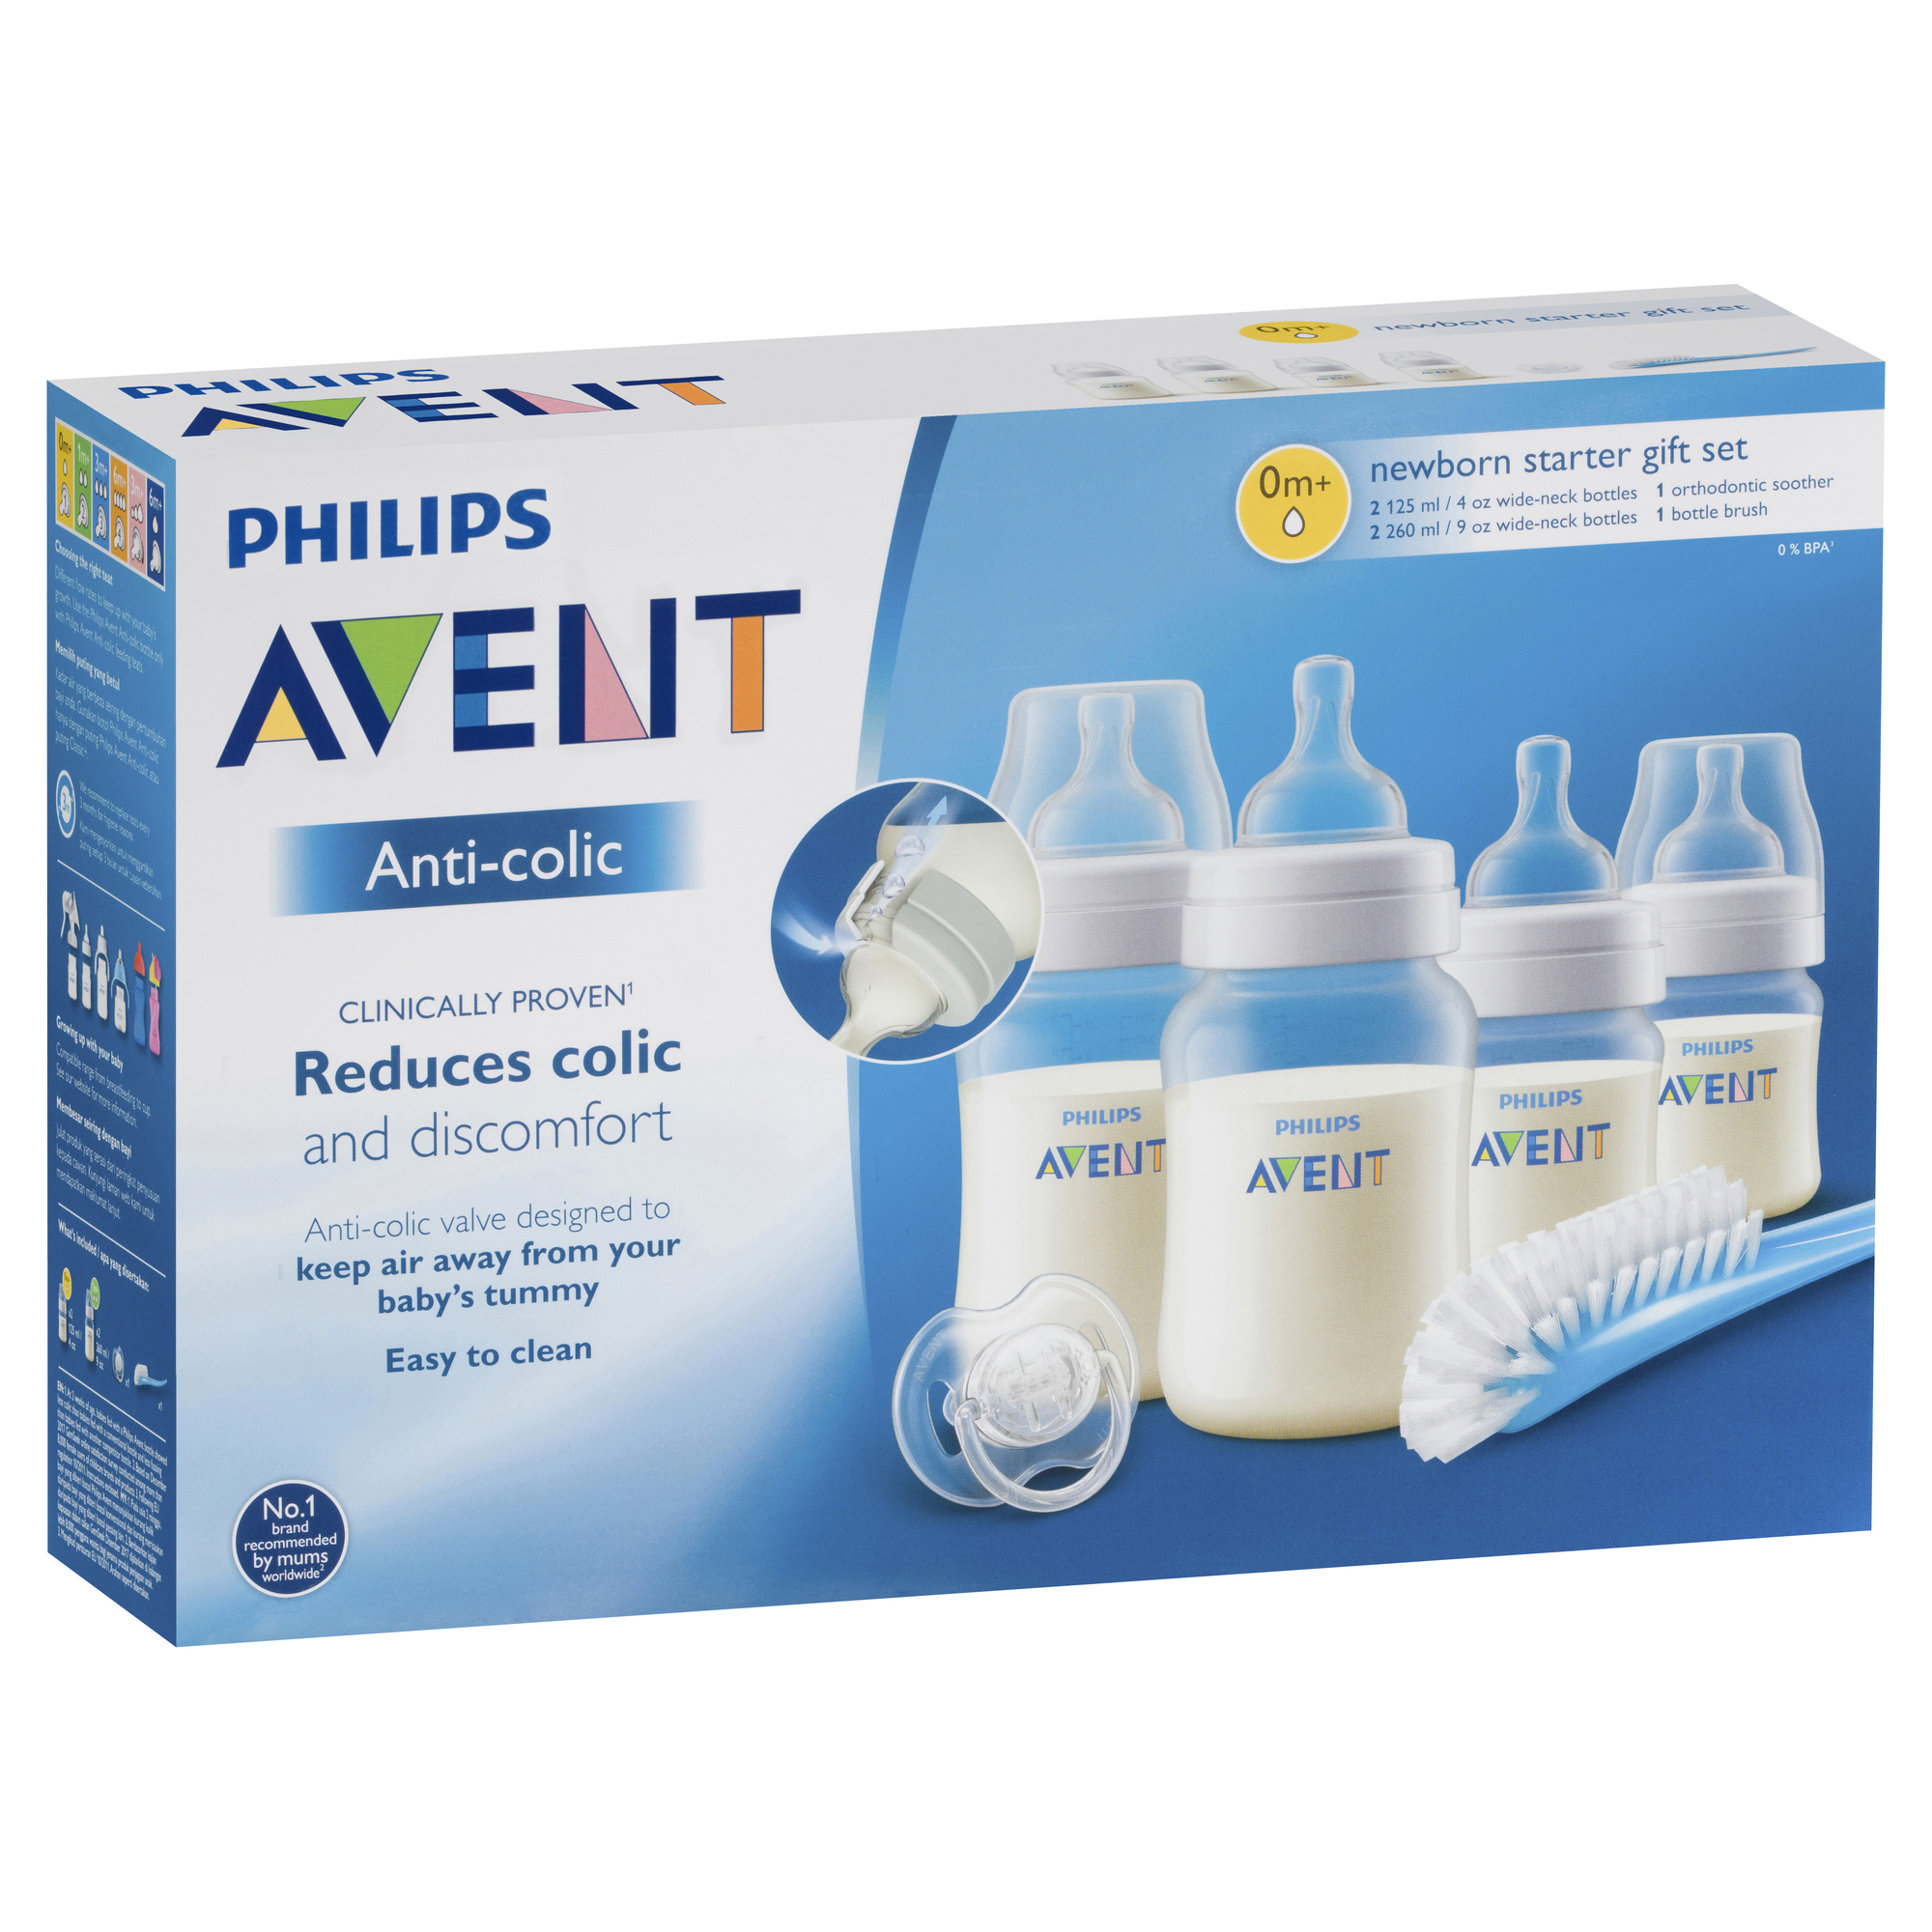 Philips AVENT Coffret Cadeau De Biberons Anti-colic